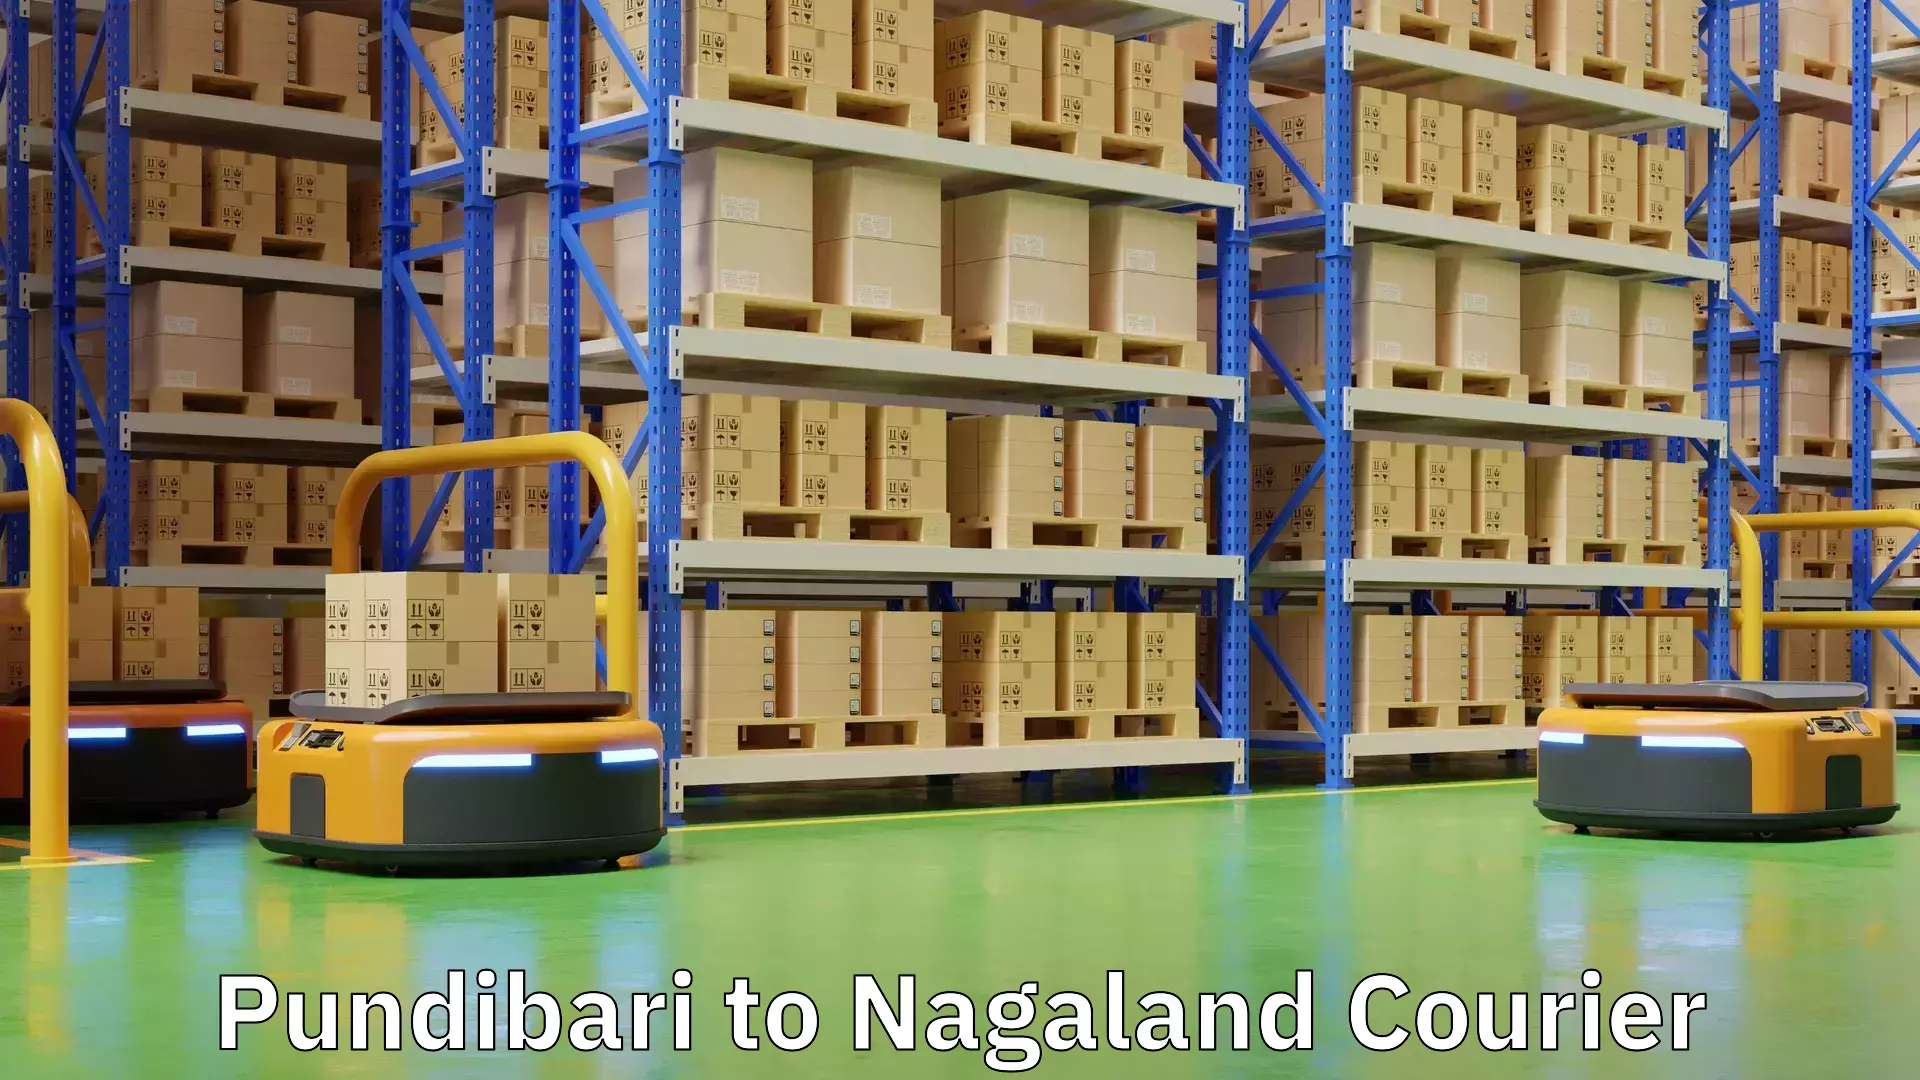 Enhanced tracking features in Pundibari to Nagaland